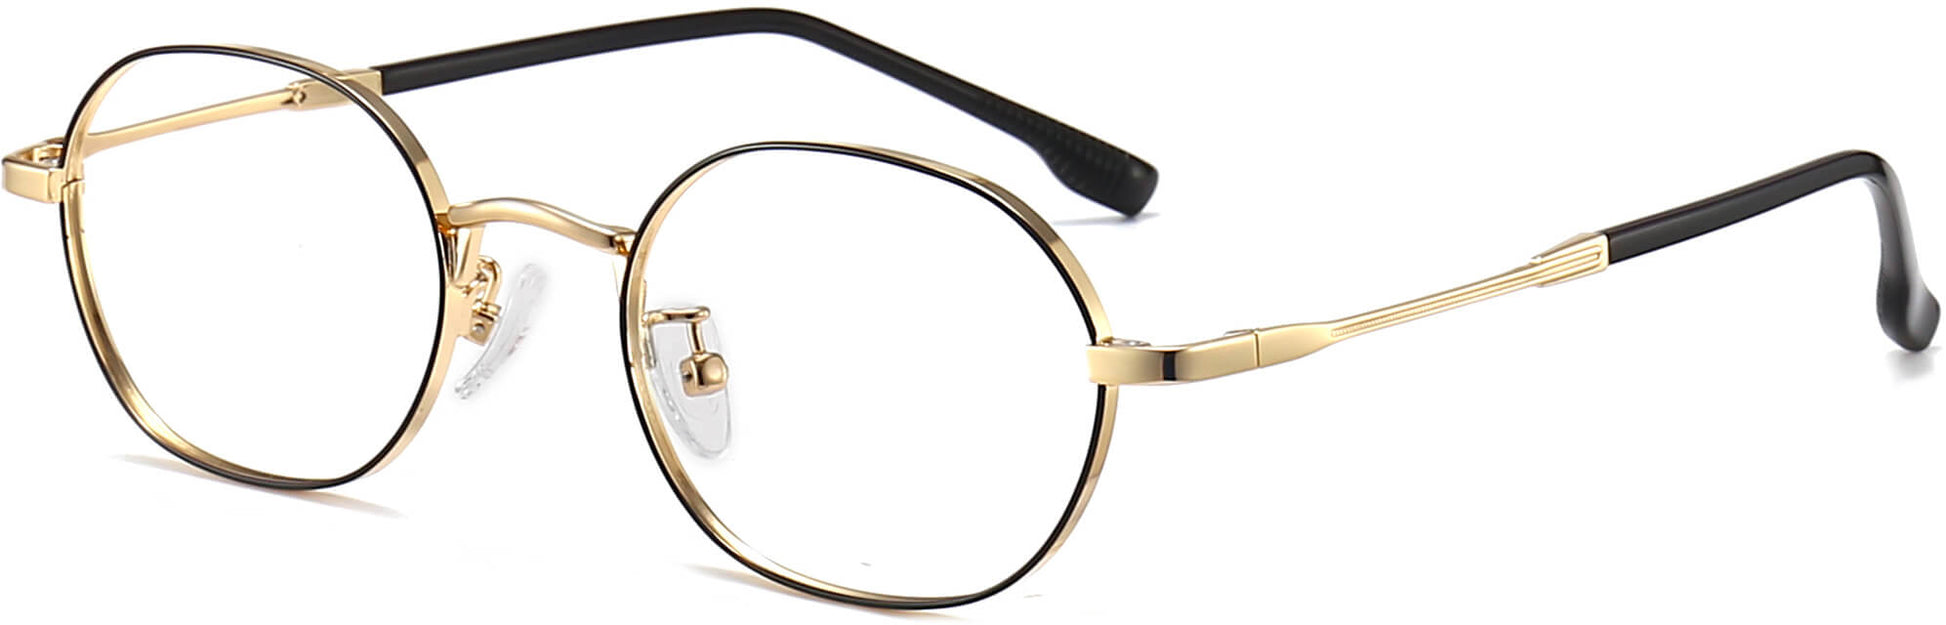 Santino Round Black Eyeglasses from ANRRI, angle view